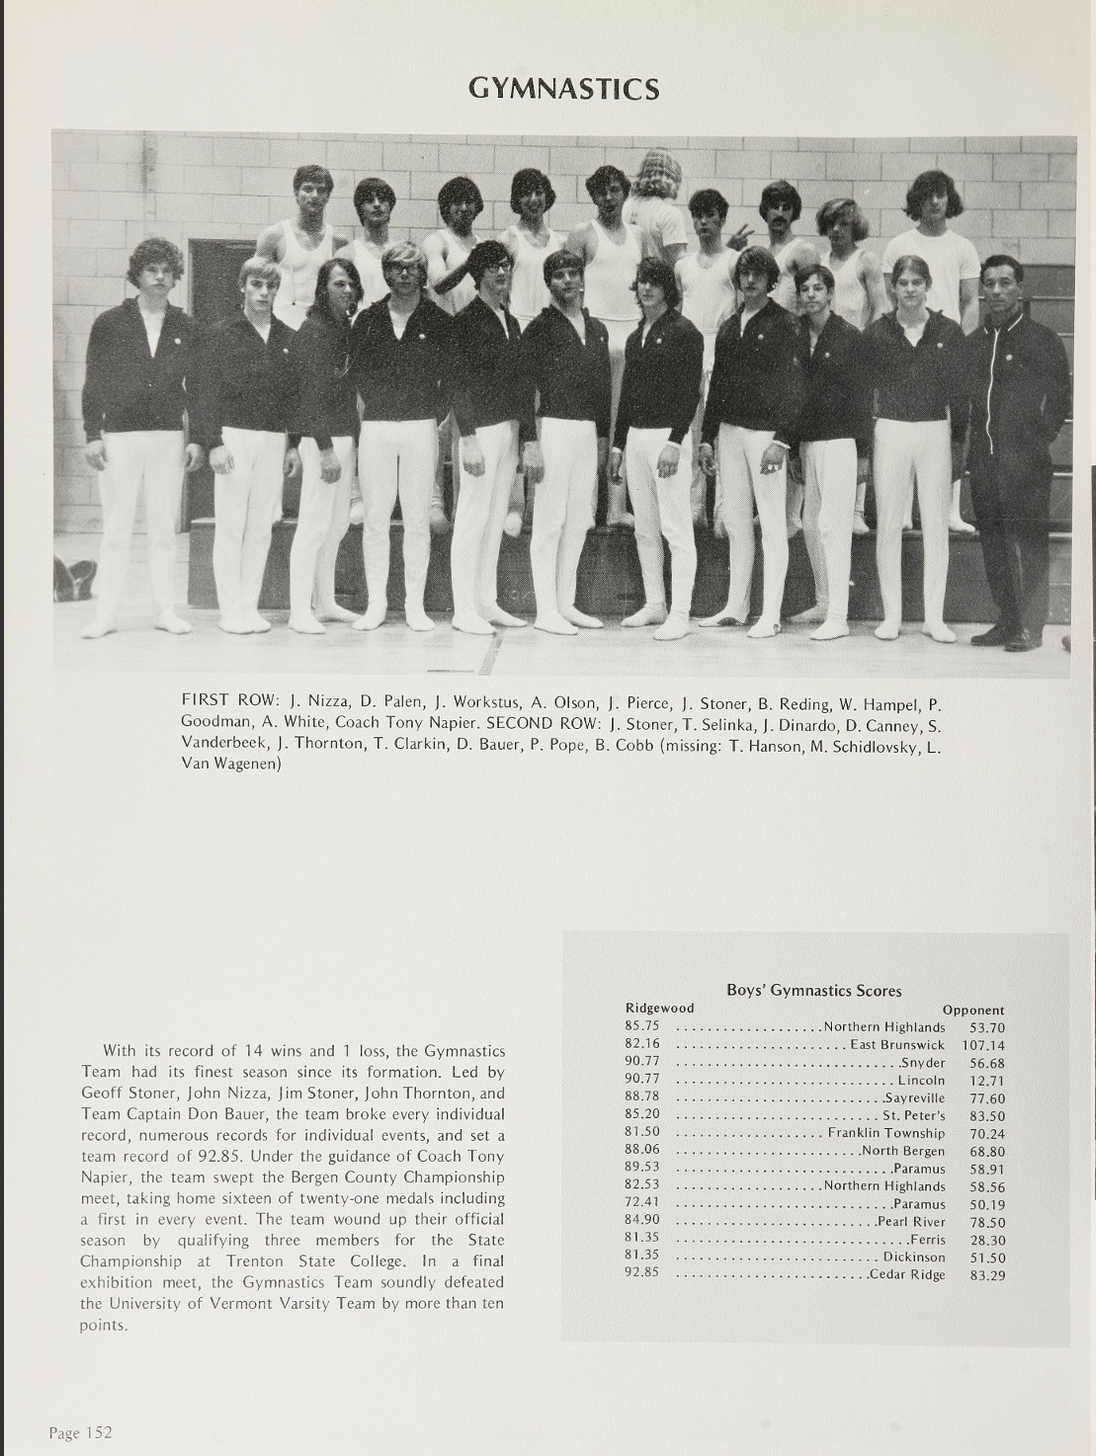 1972 Boys’ Gymnastics Team